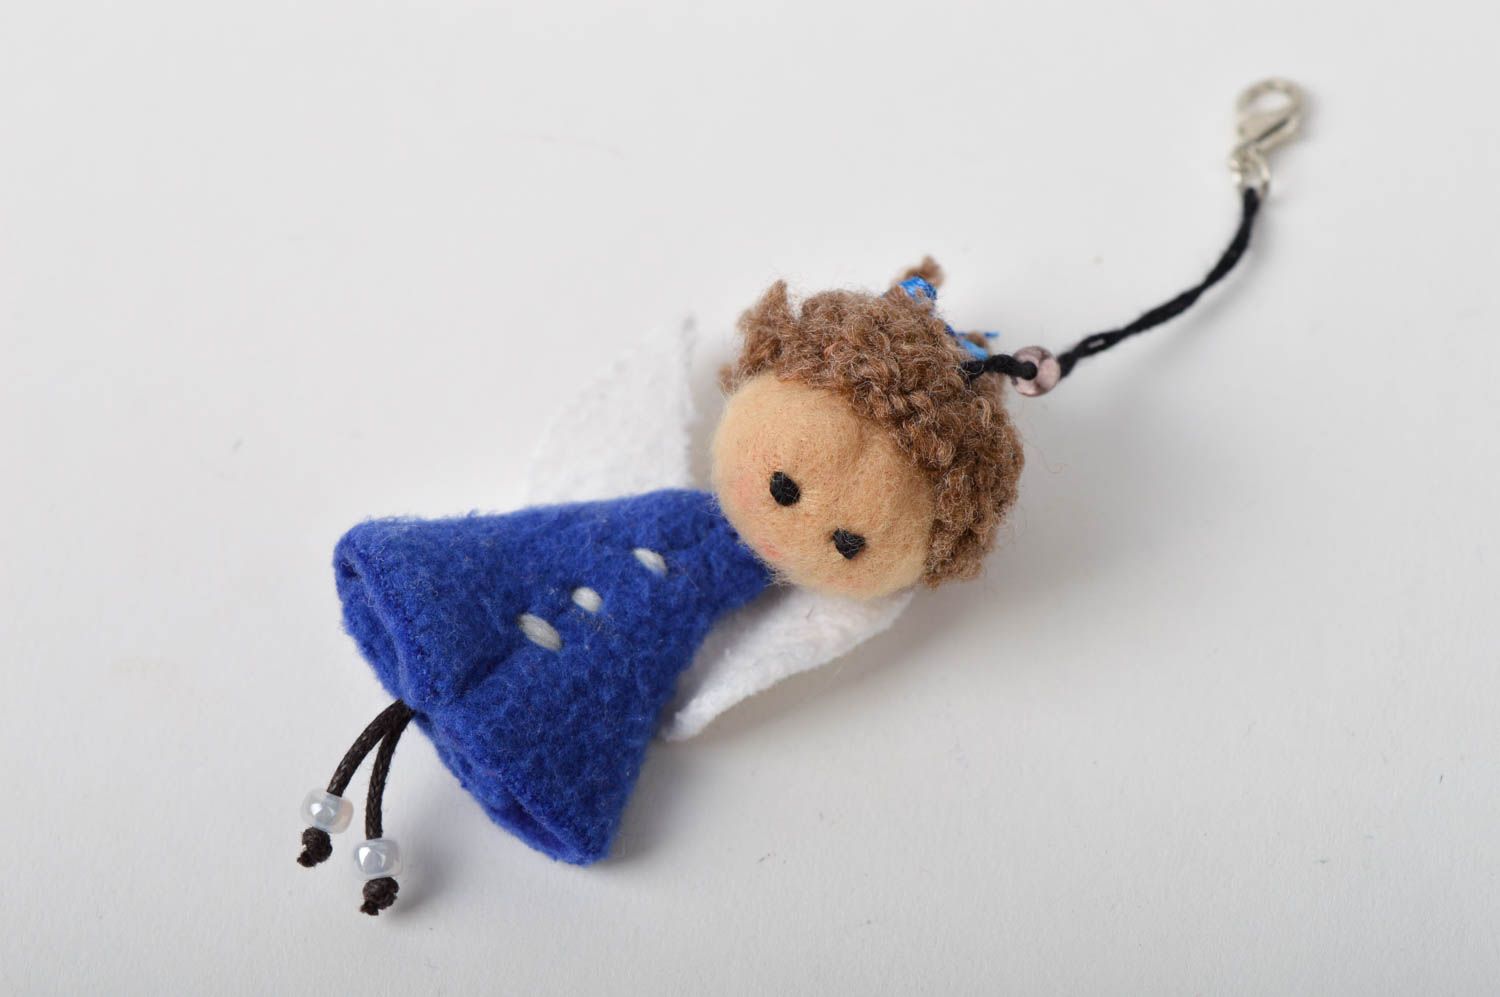 Handmade keychain textile keychain unusual toy textile toy gift ideas photo 1